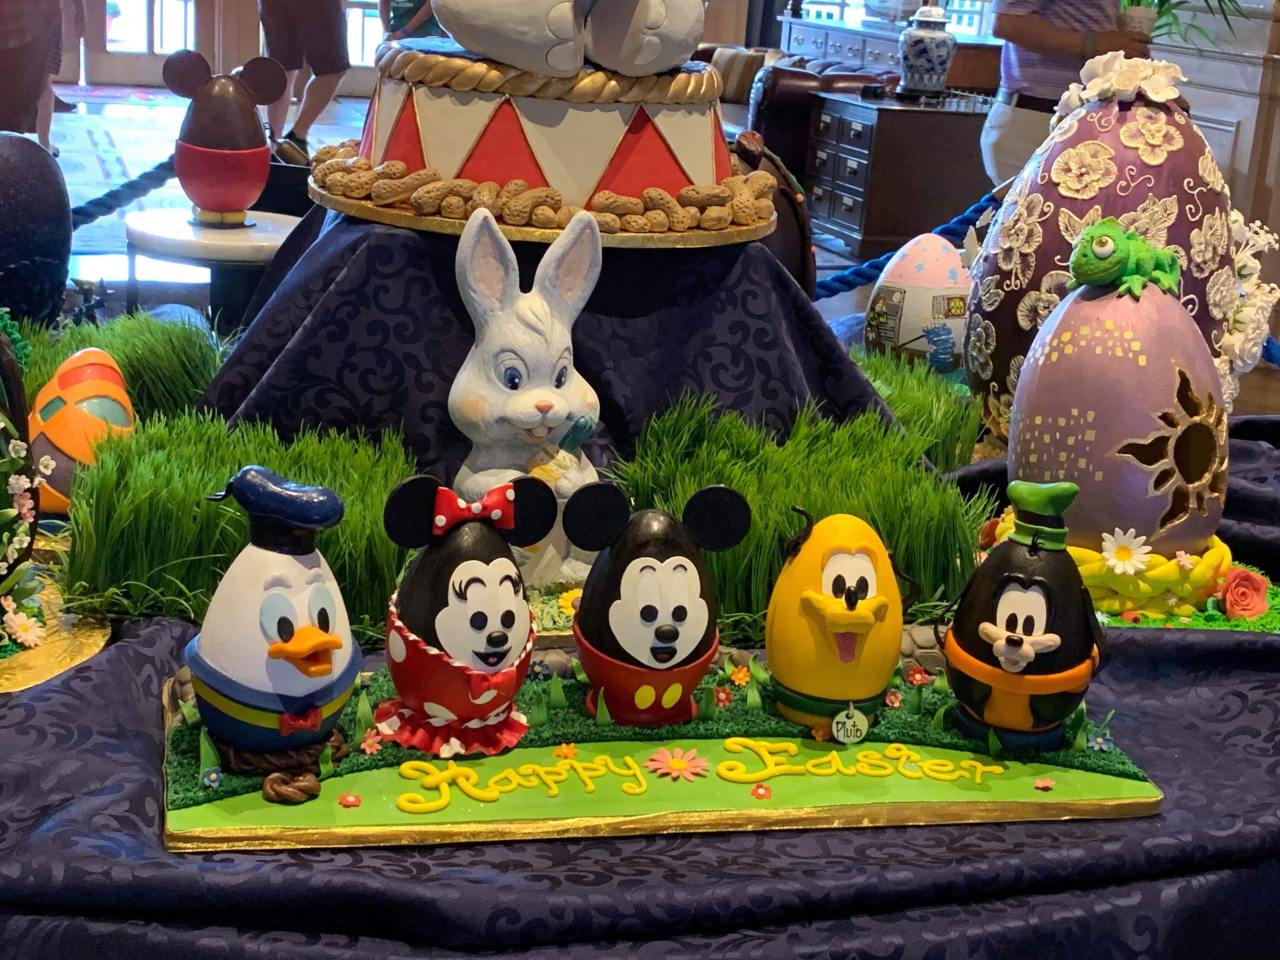 Disney World Resort Easter Egg displays are returning!